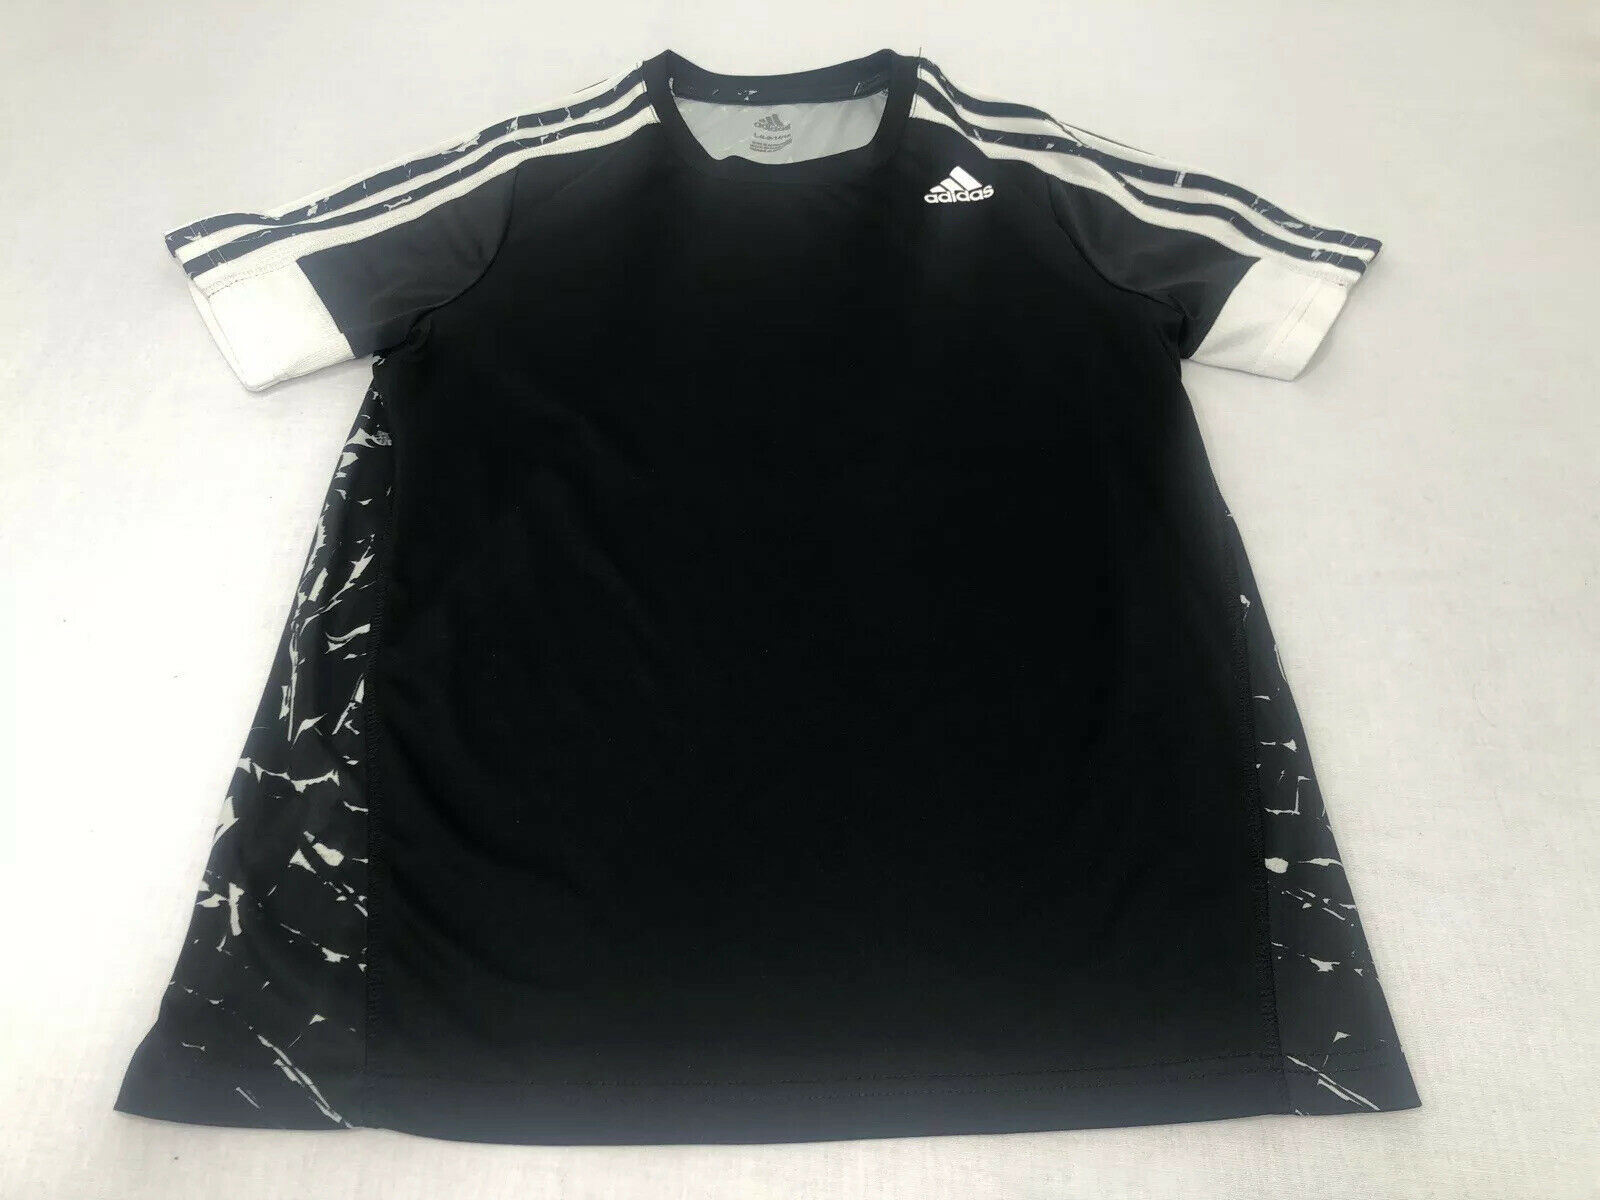 Adidas Youth Short Sleeve Activewear T Shirt Black White Graffiti Pattern Large